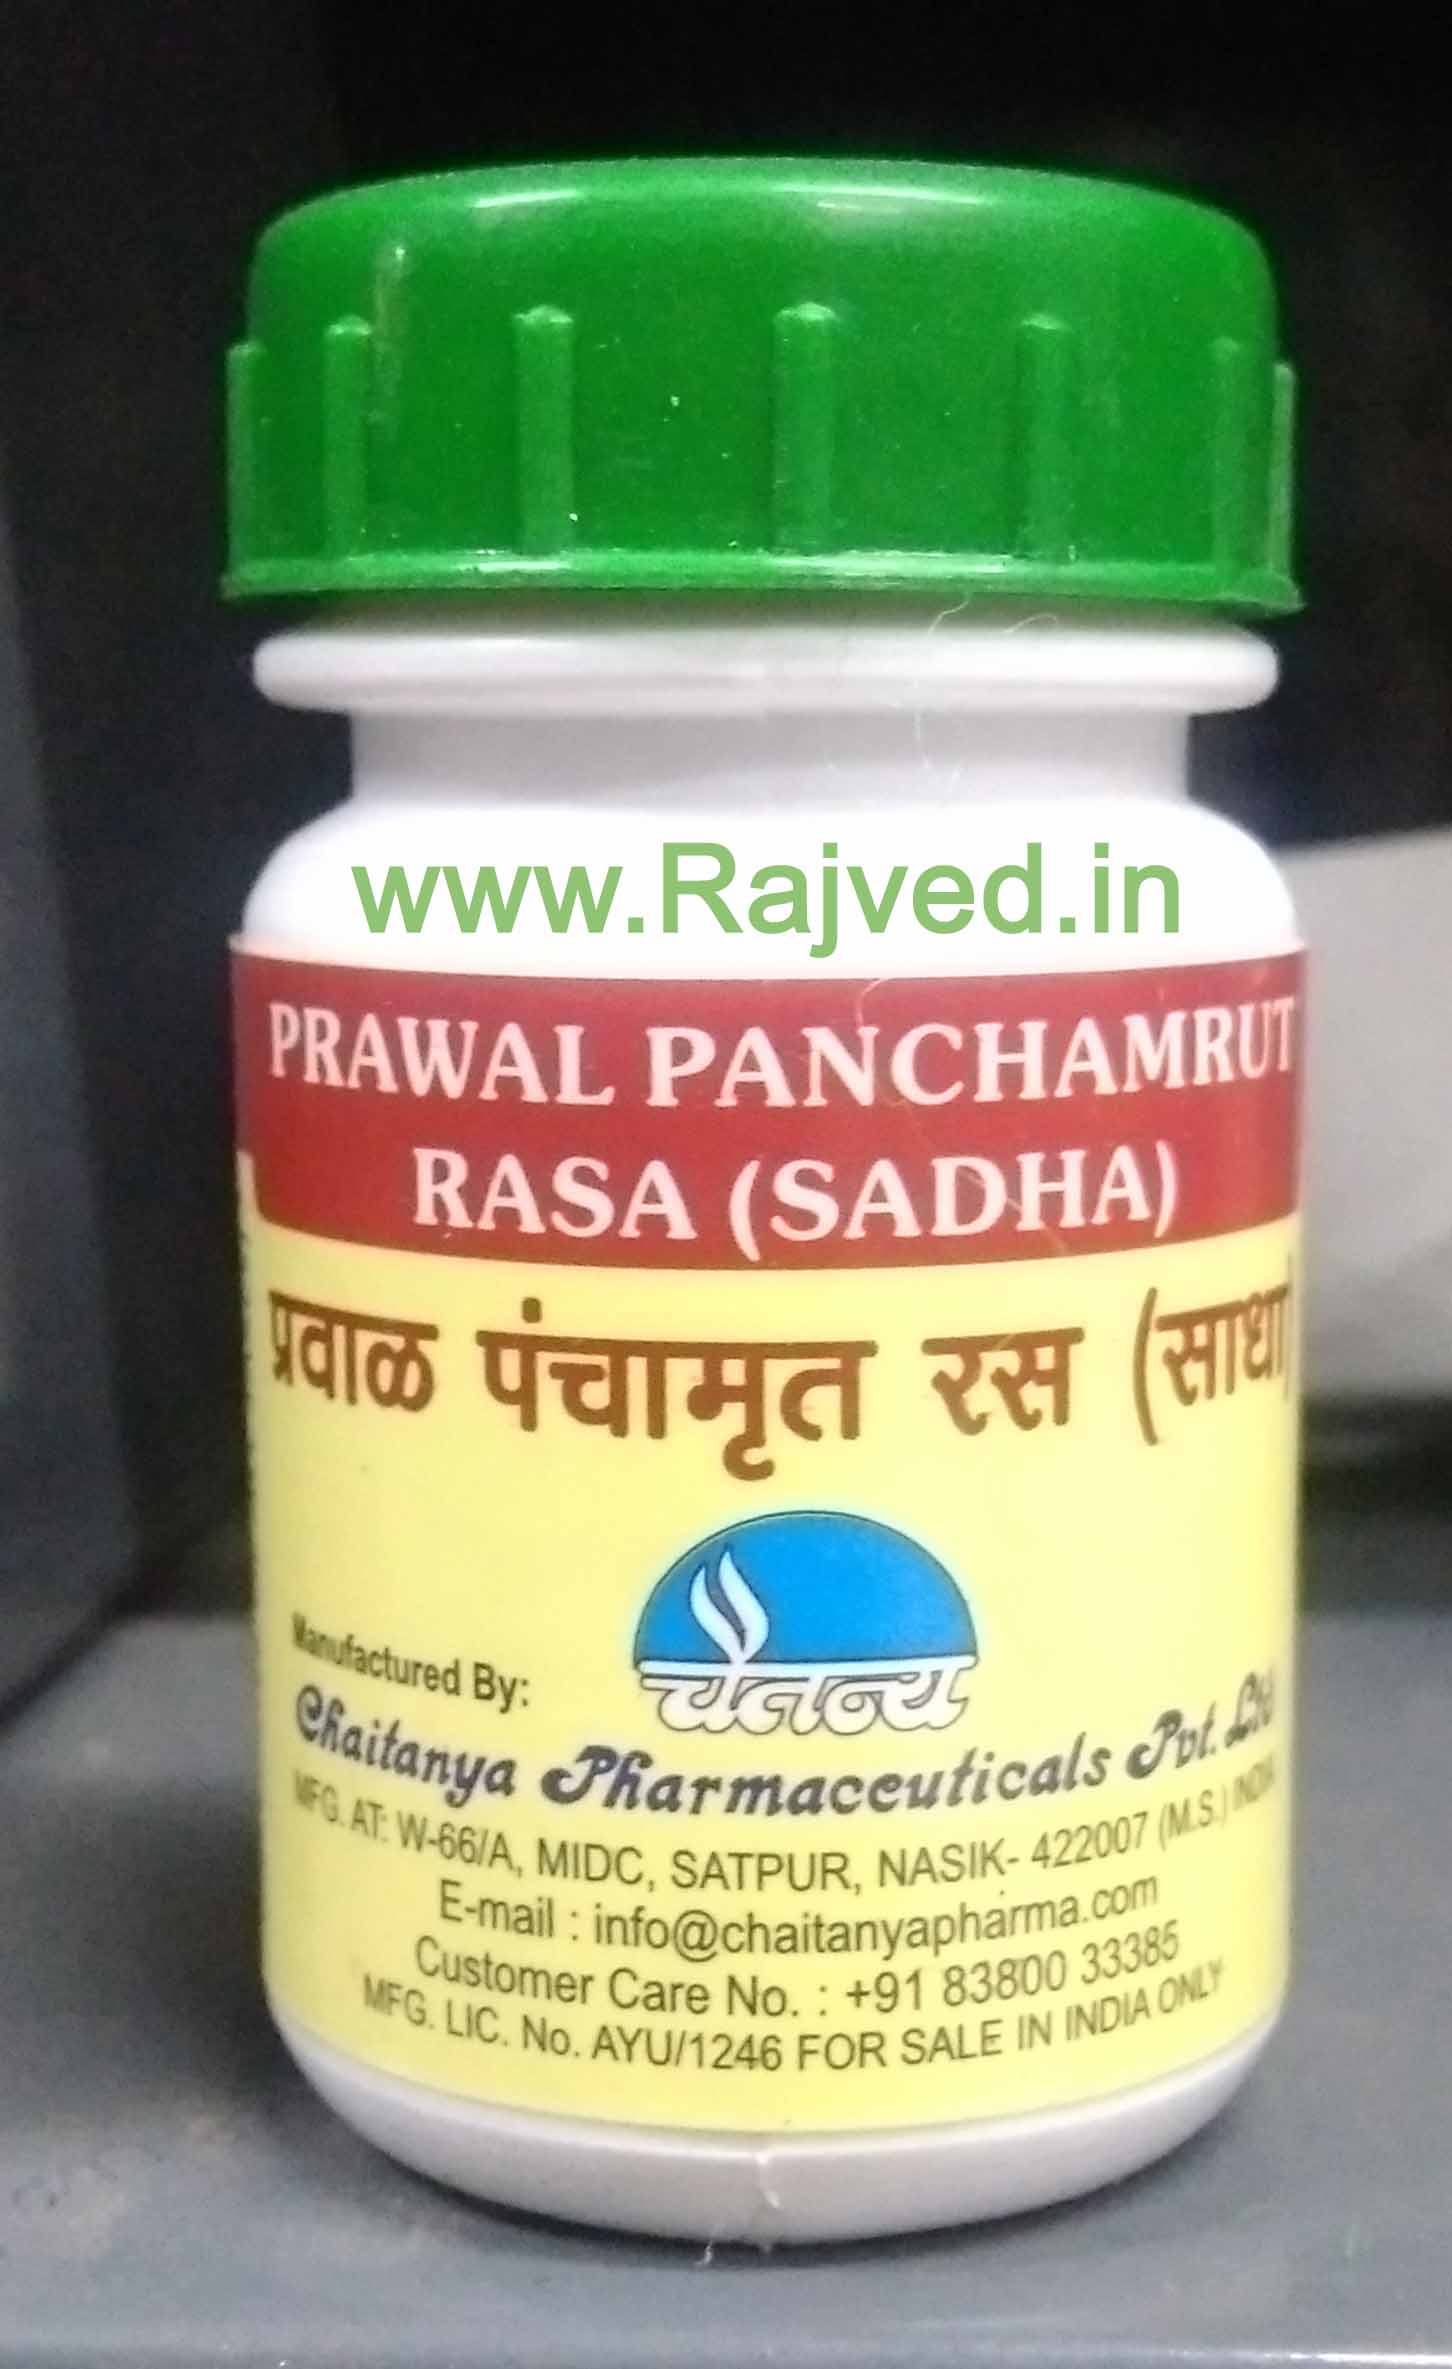 prawal panchamrut rasa sadha 60 tab upto 20% off chaitanya pharmaceuticals